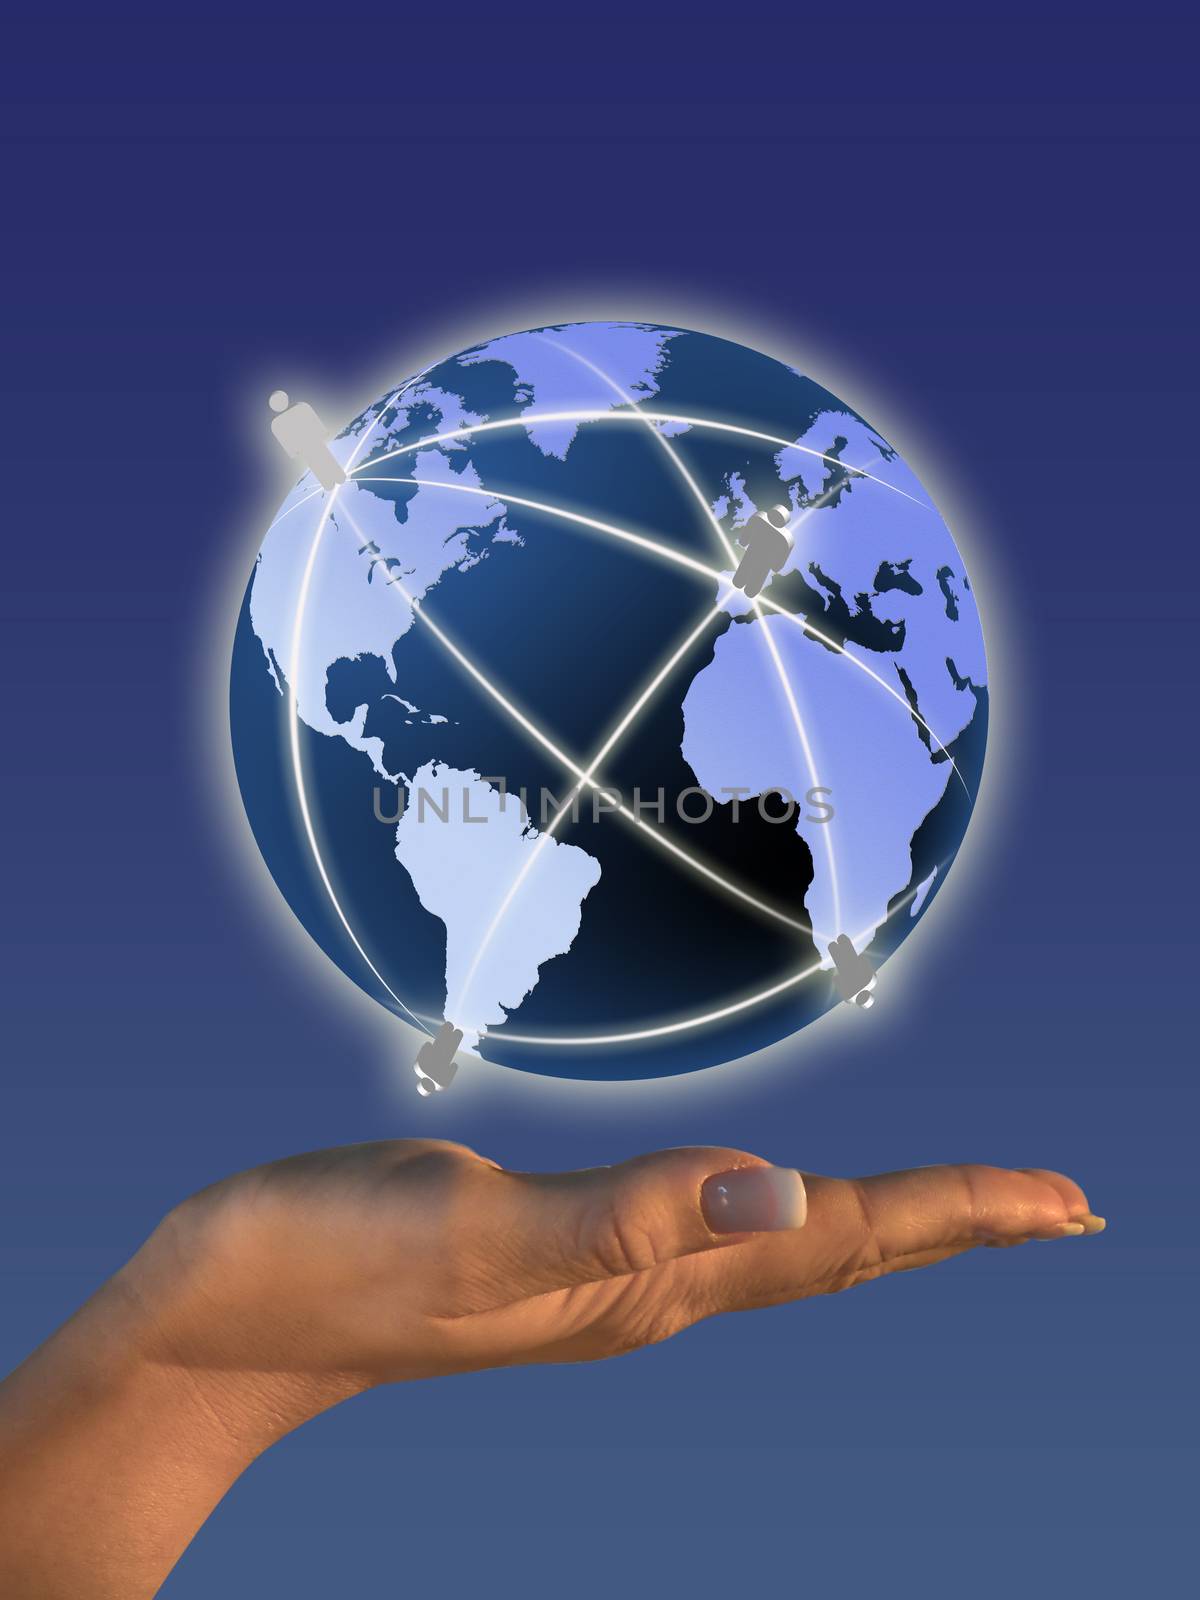 Globe on human hand. Communication concept illustration.